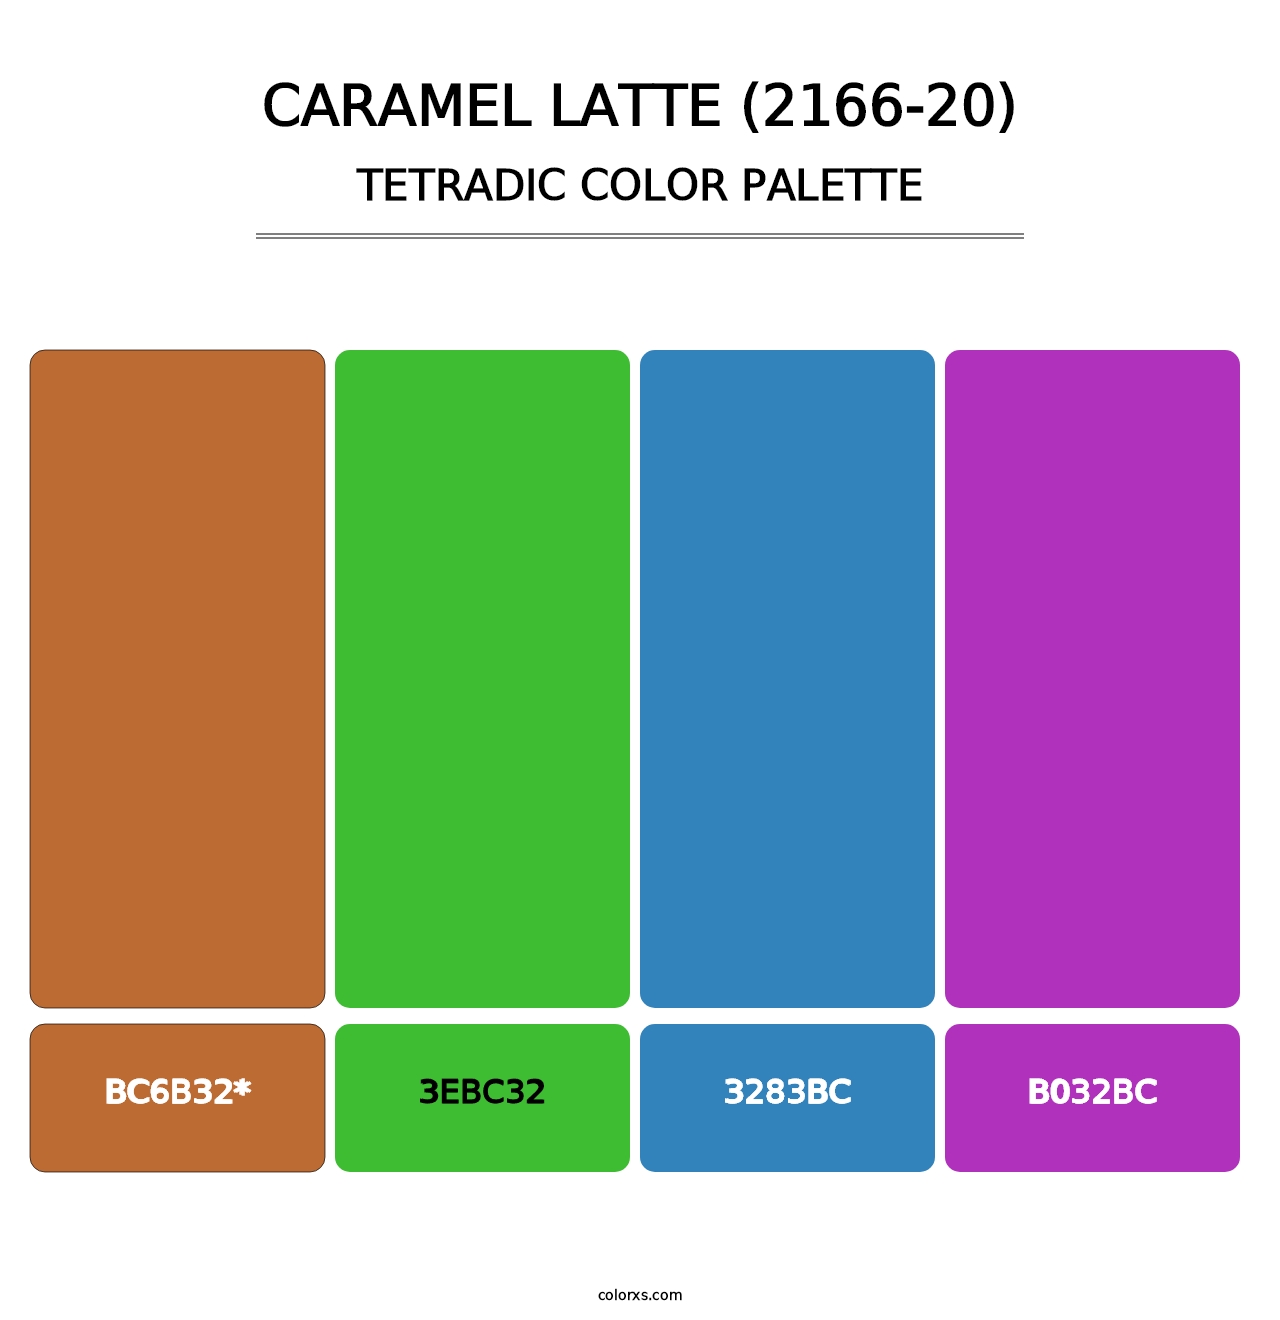 Caramel Latte (2166-20) - Tetradic Color Palette